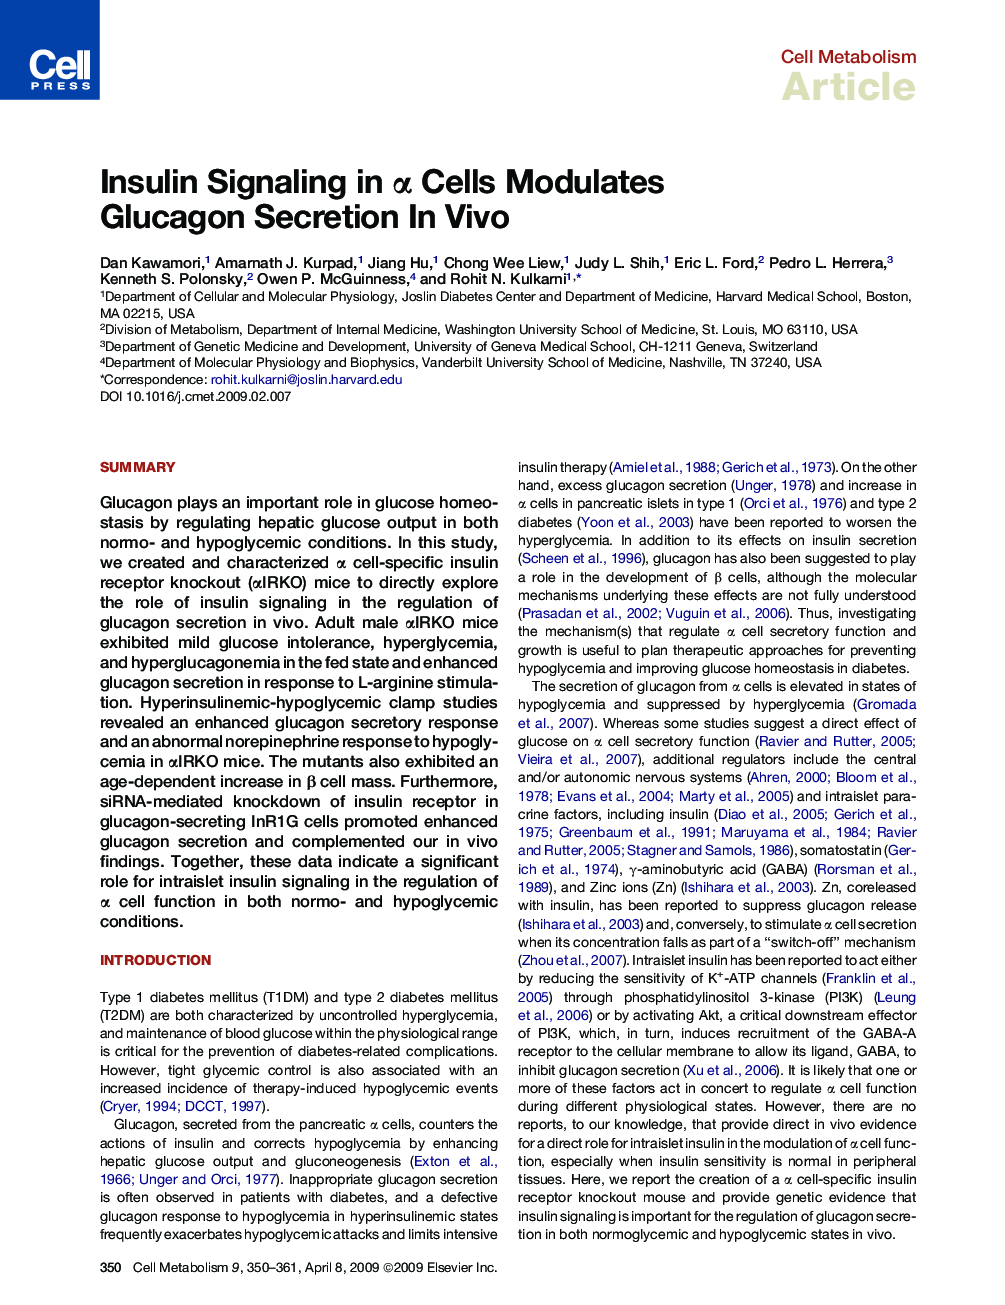 Insulin Signaling in α Cells Modulates Glucagon Secretion In Vivo